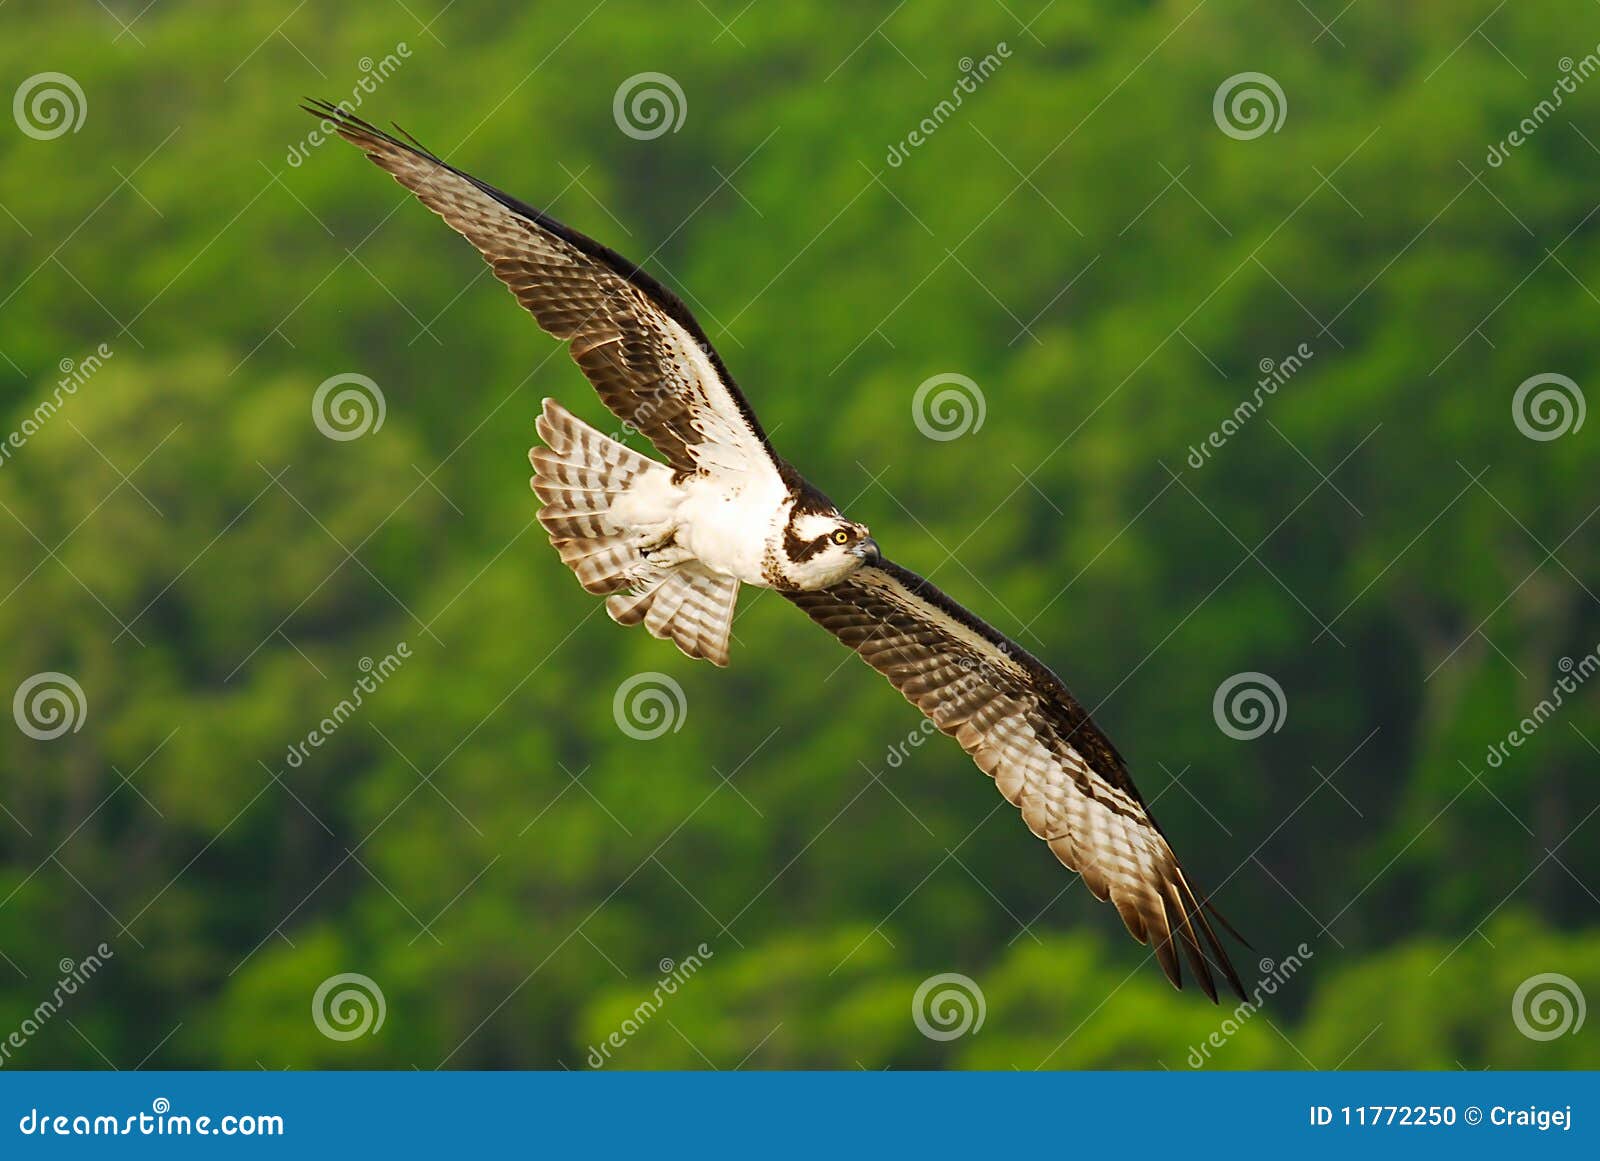 Soaring Osprey. An Osprey soars searching for prey.